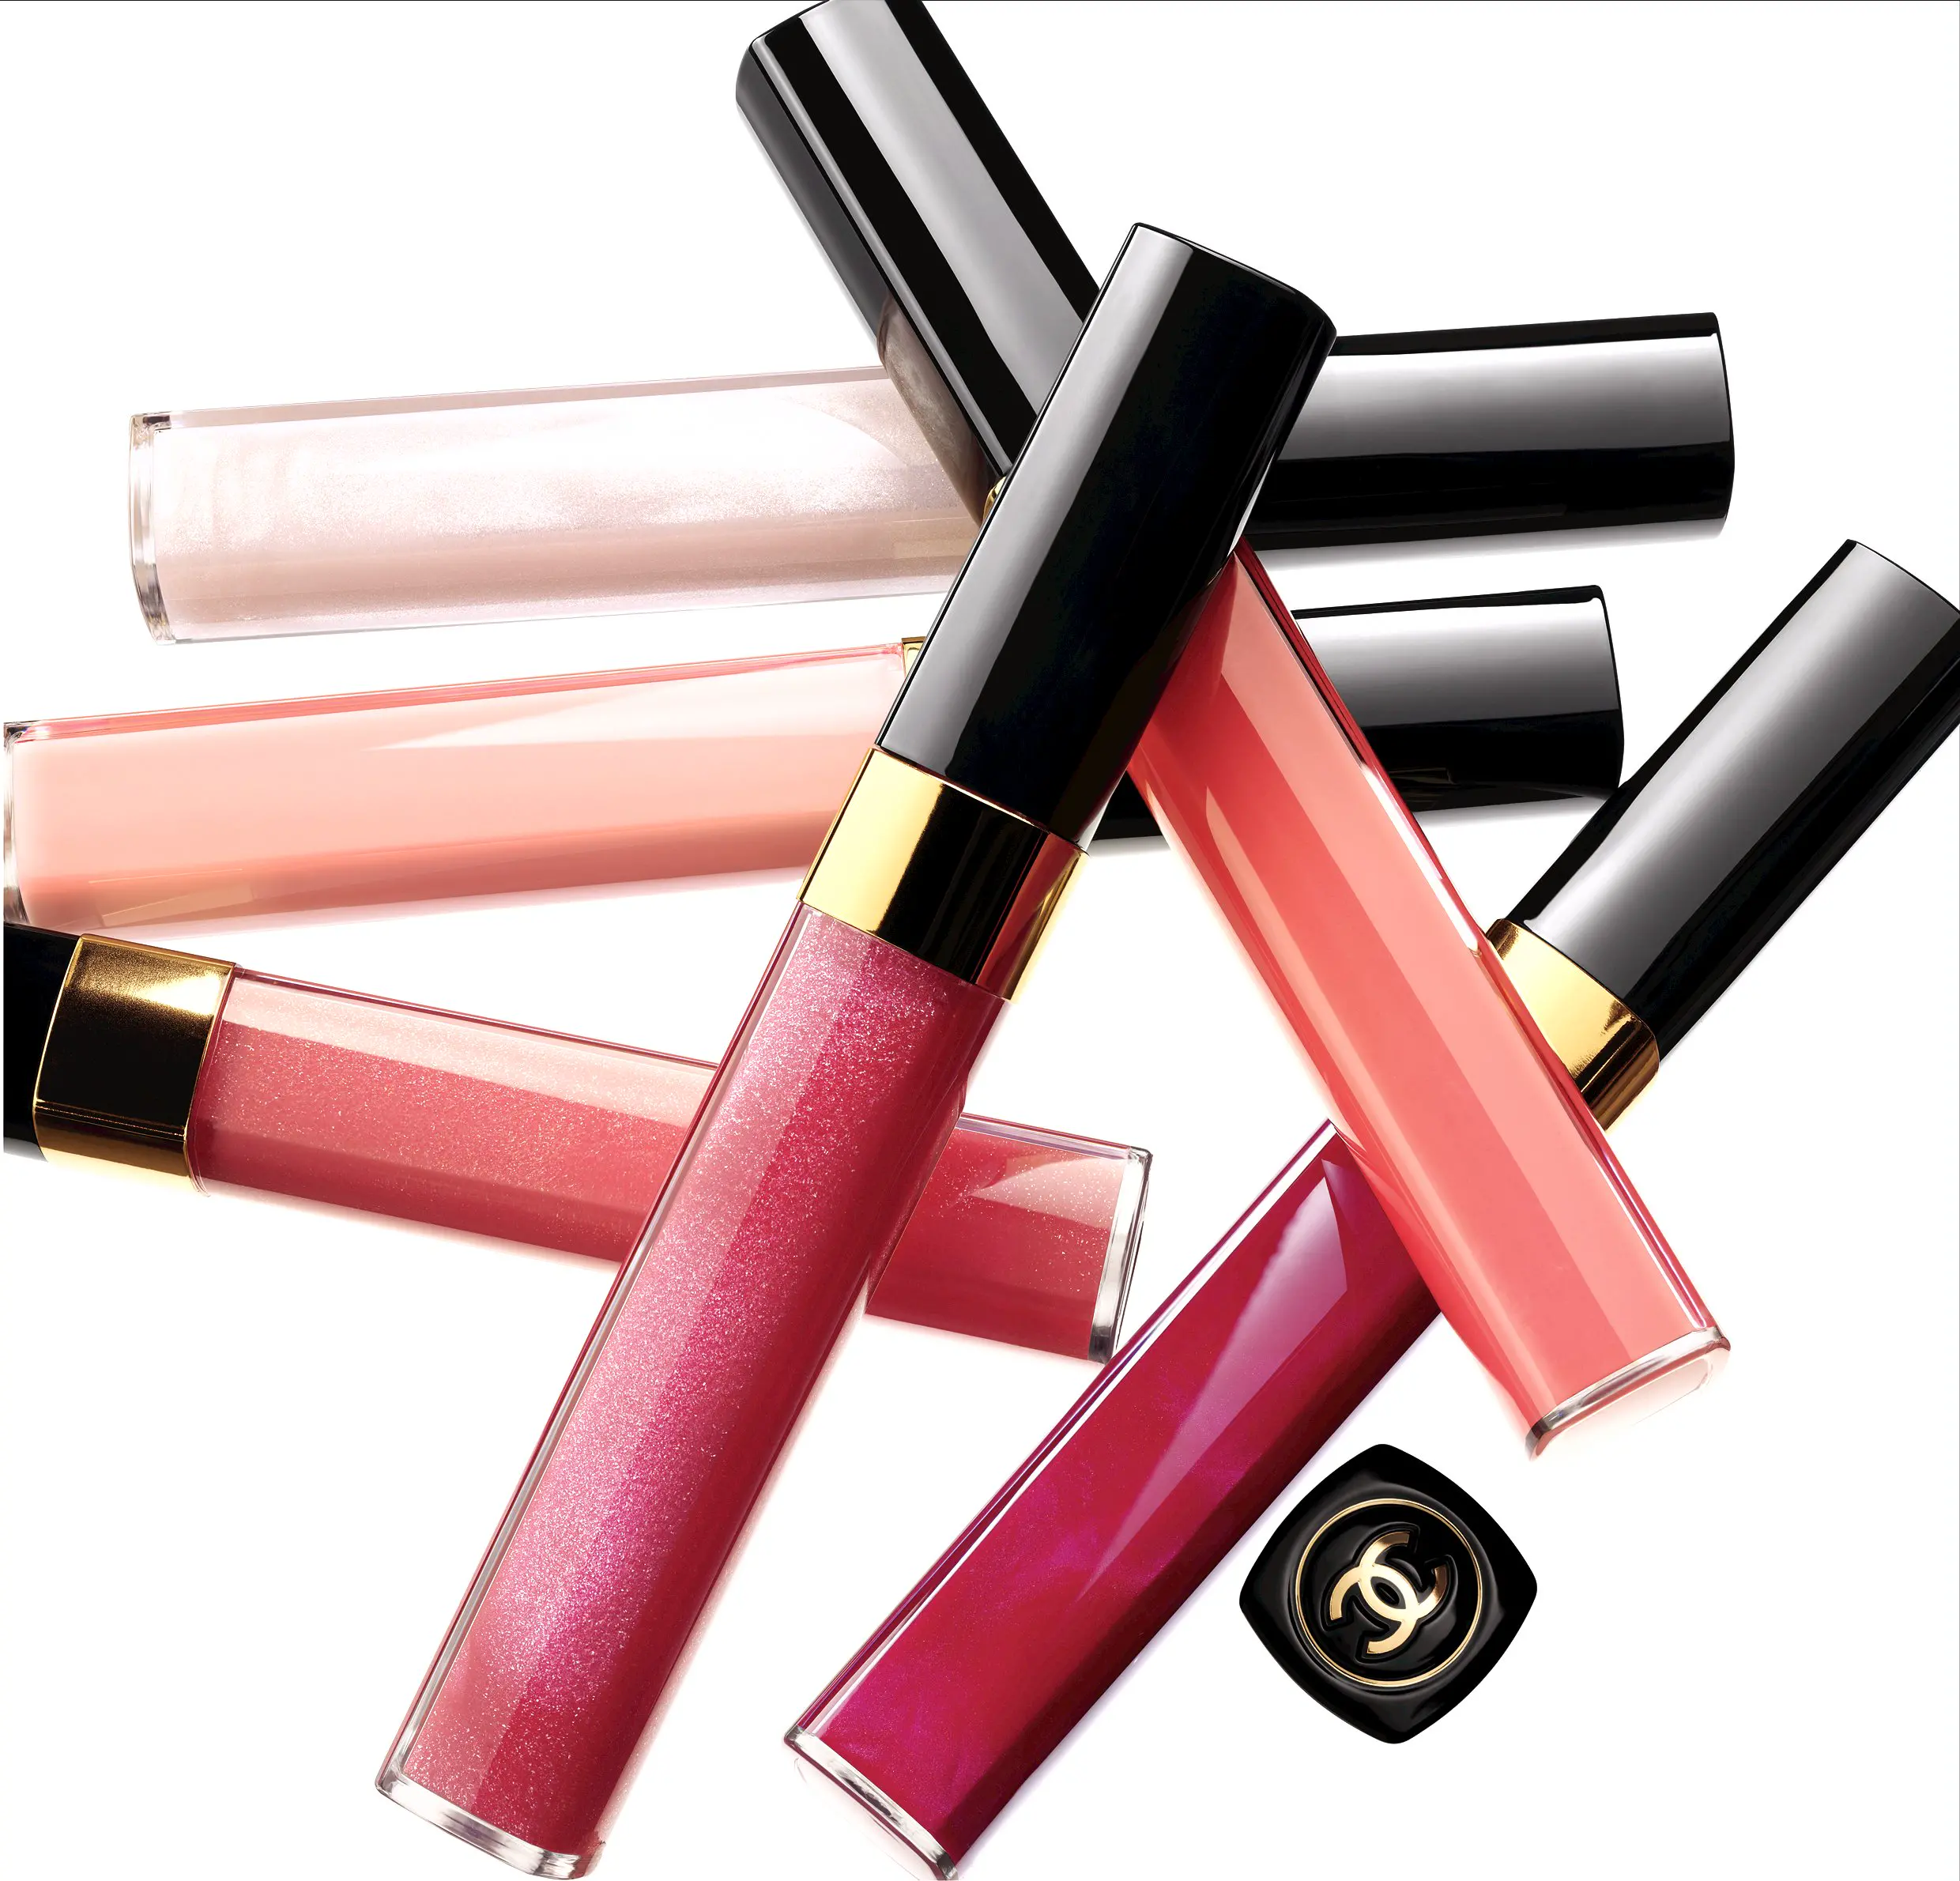 Elle test drives chanel's new universally-flattering red lipsticks